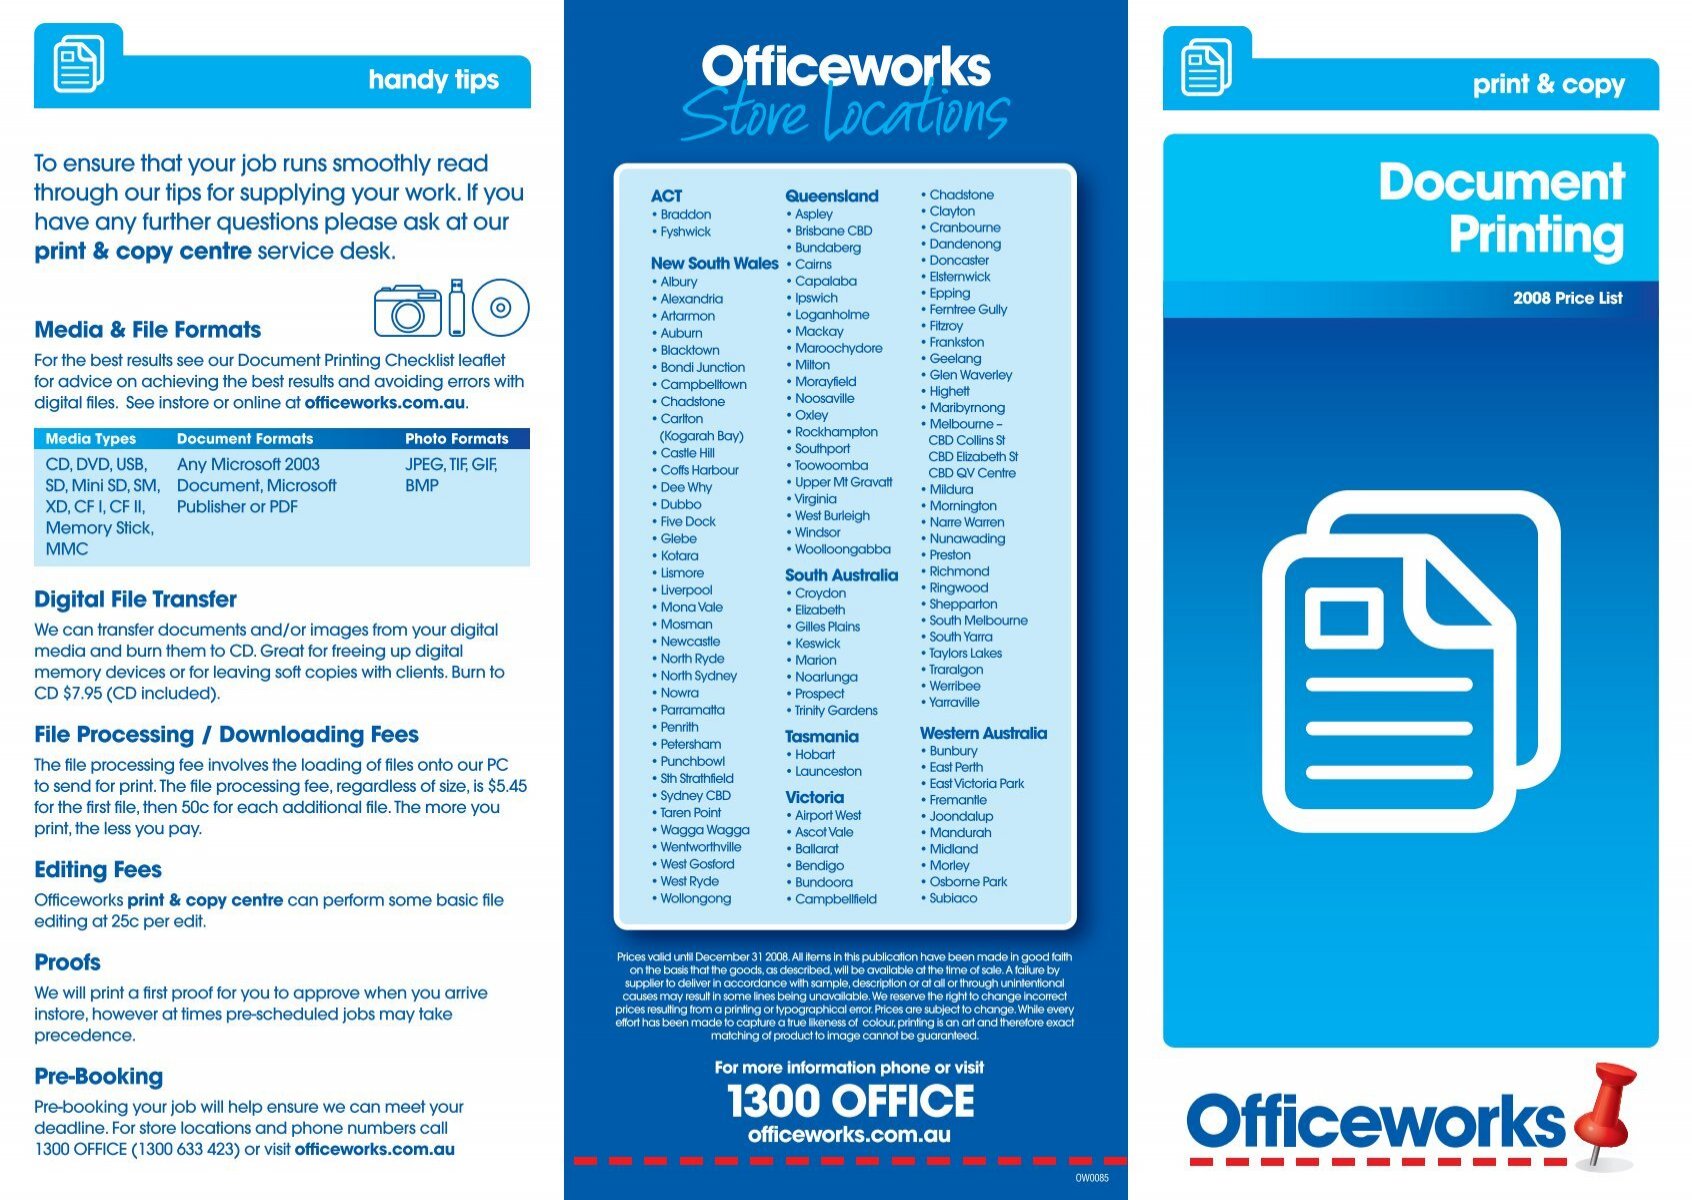 Officeworks Print Document